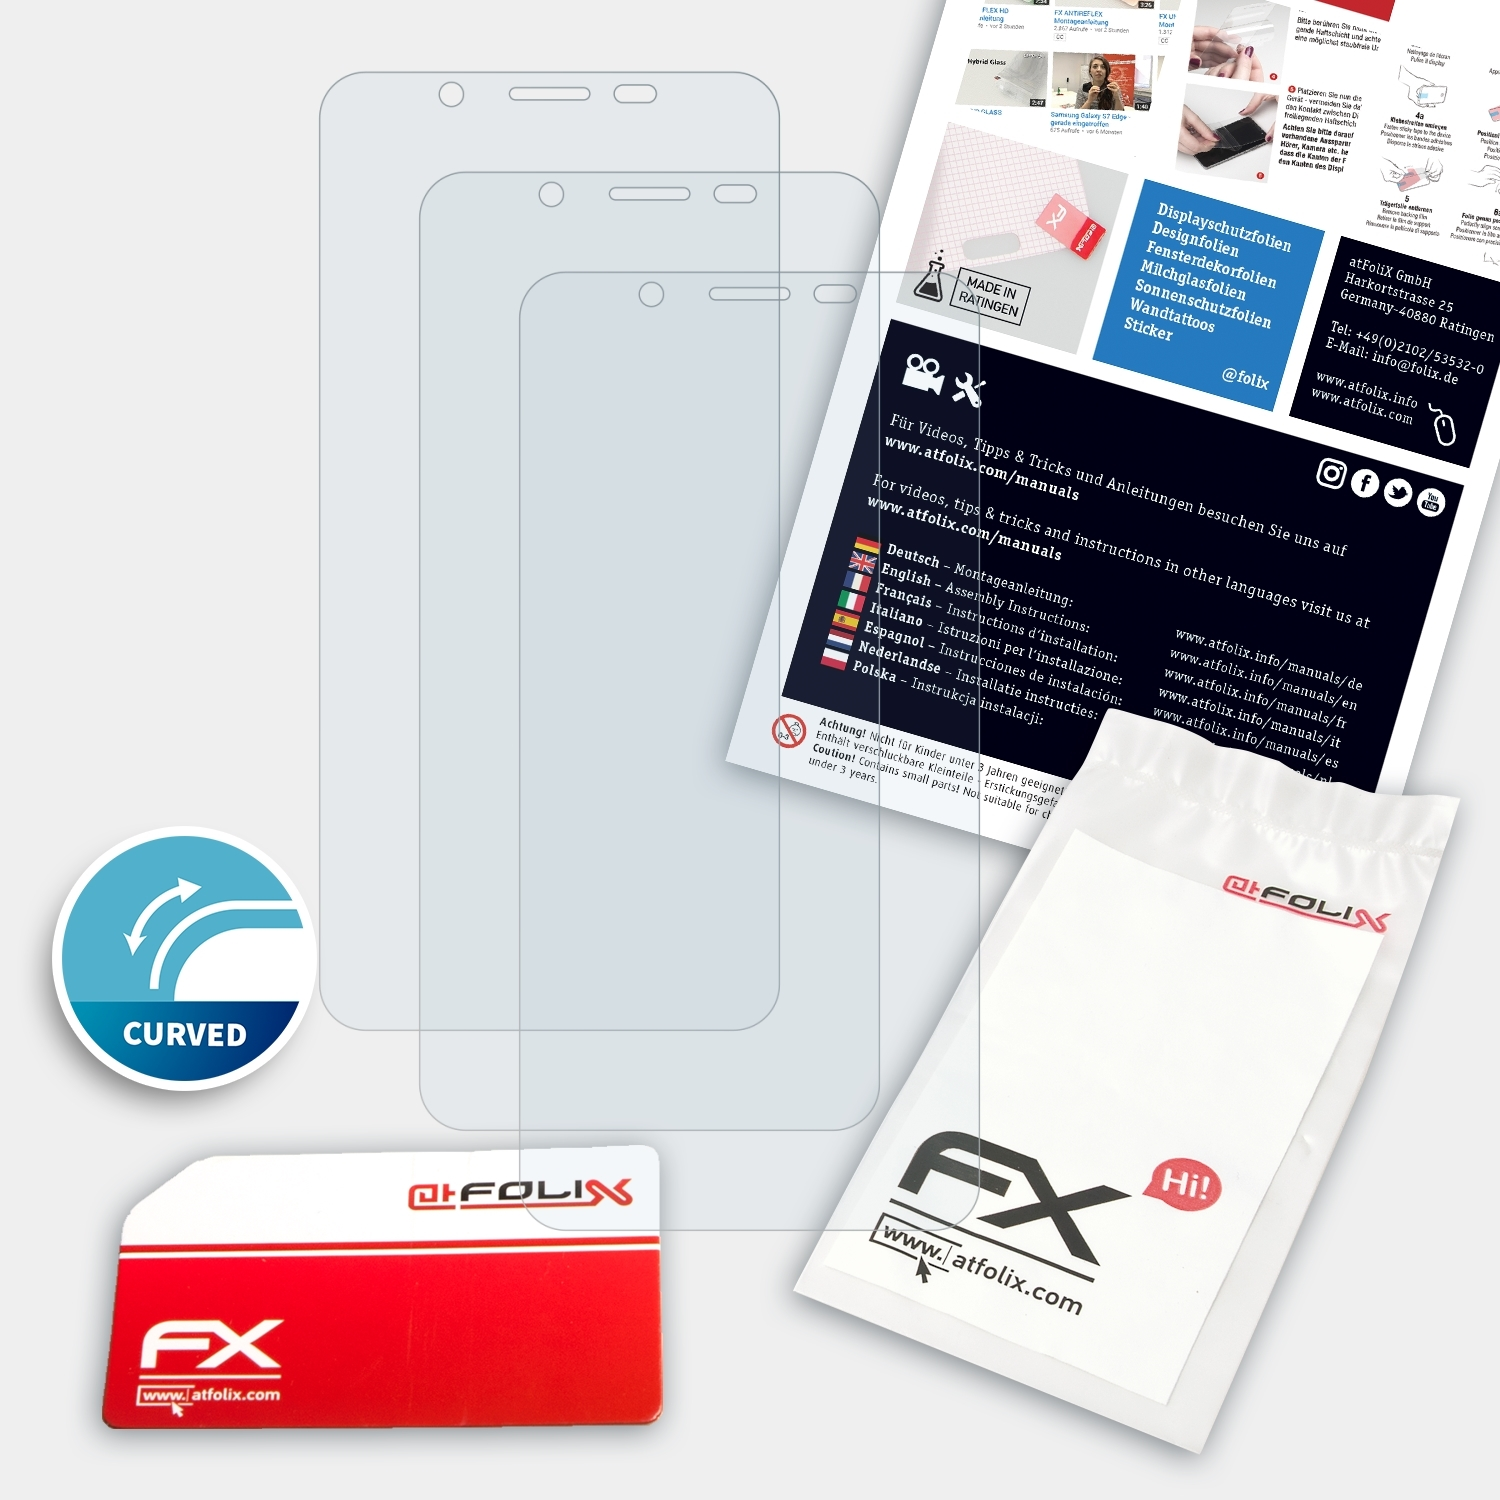 ATFOLIX 3x FX-ActiFleX Vivo V7) Displayschutz(für